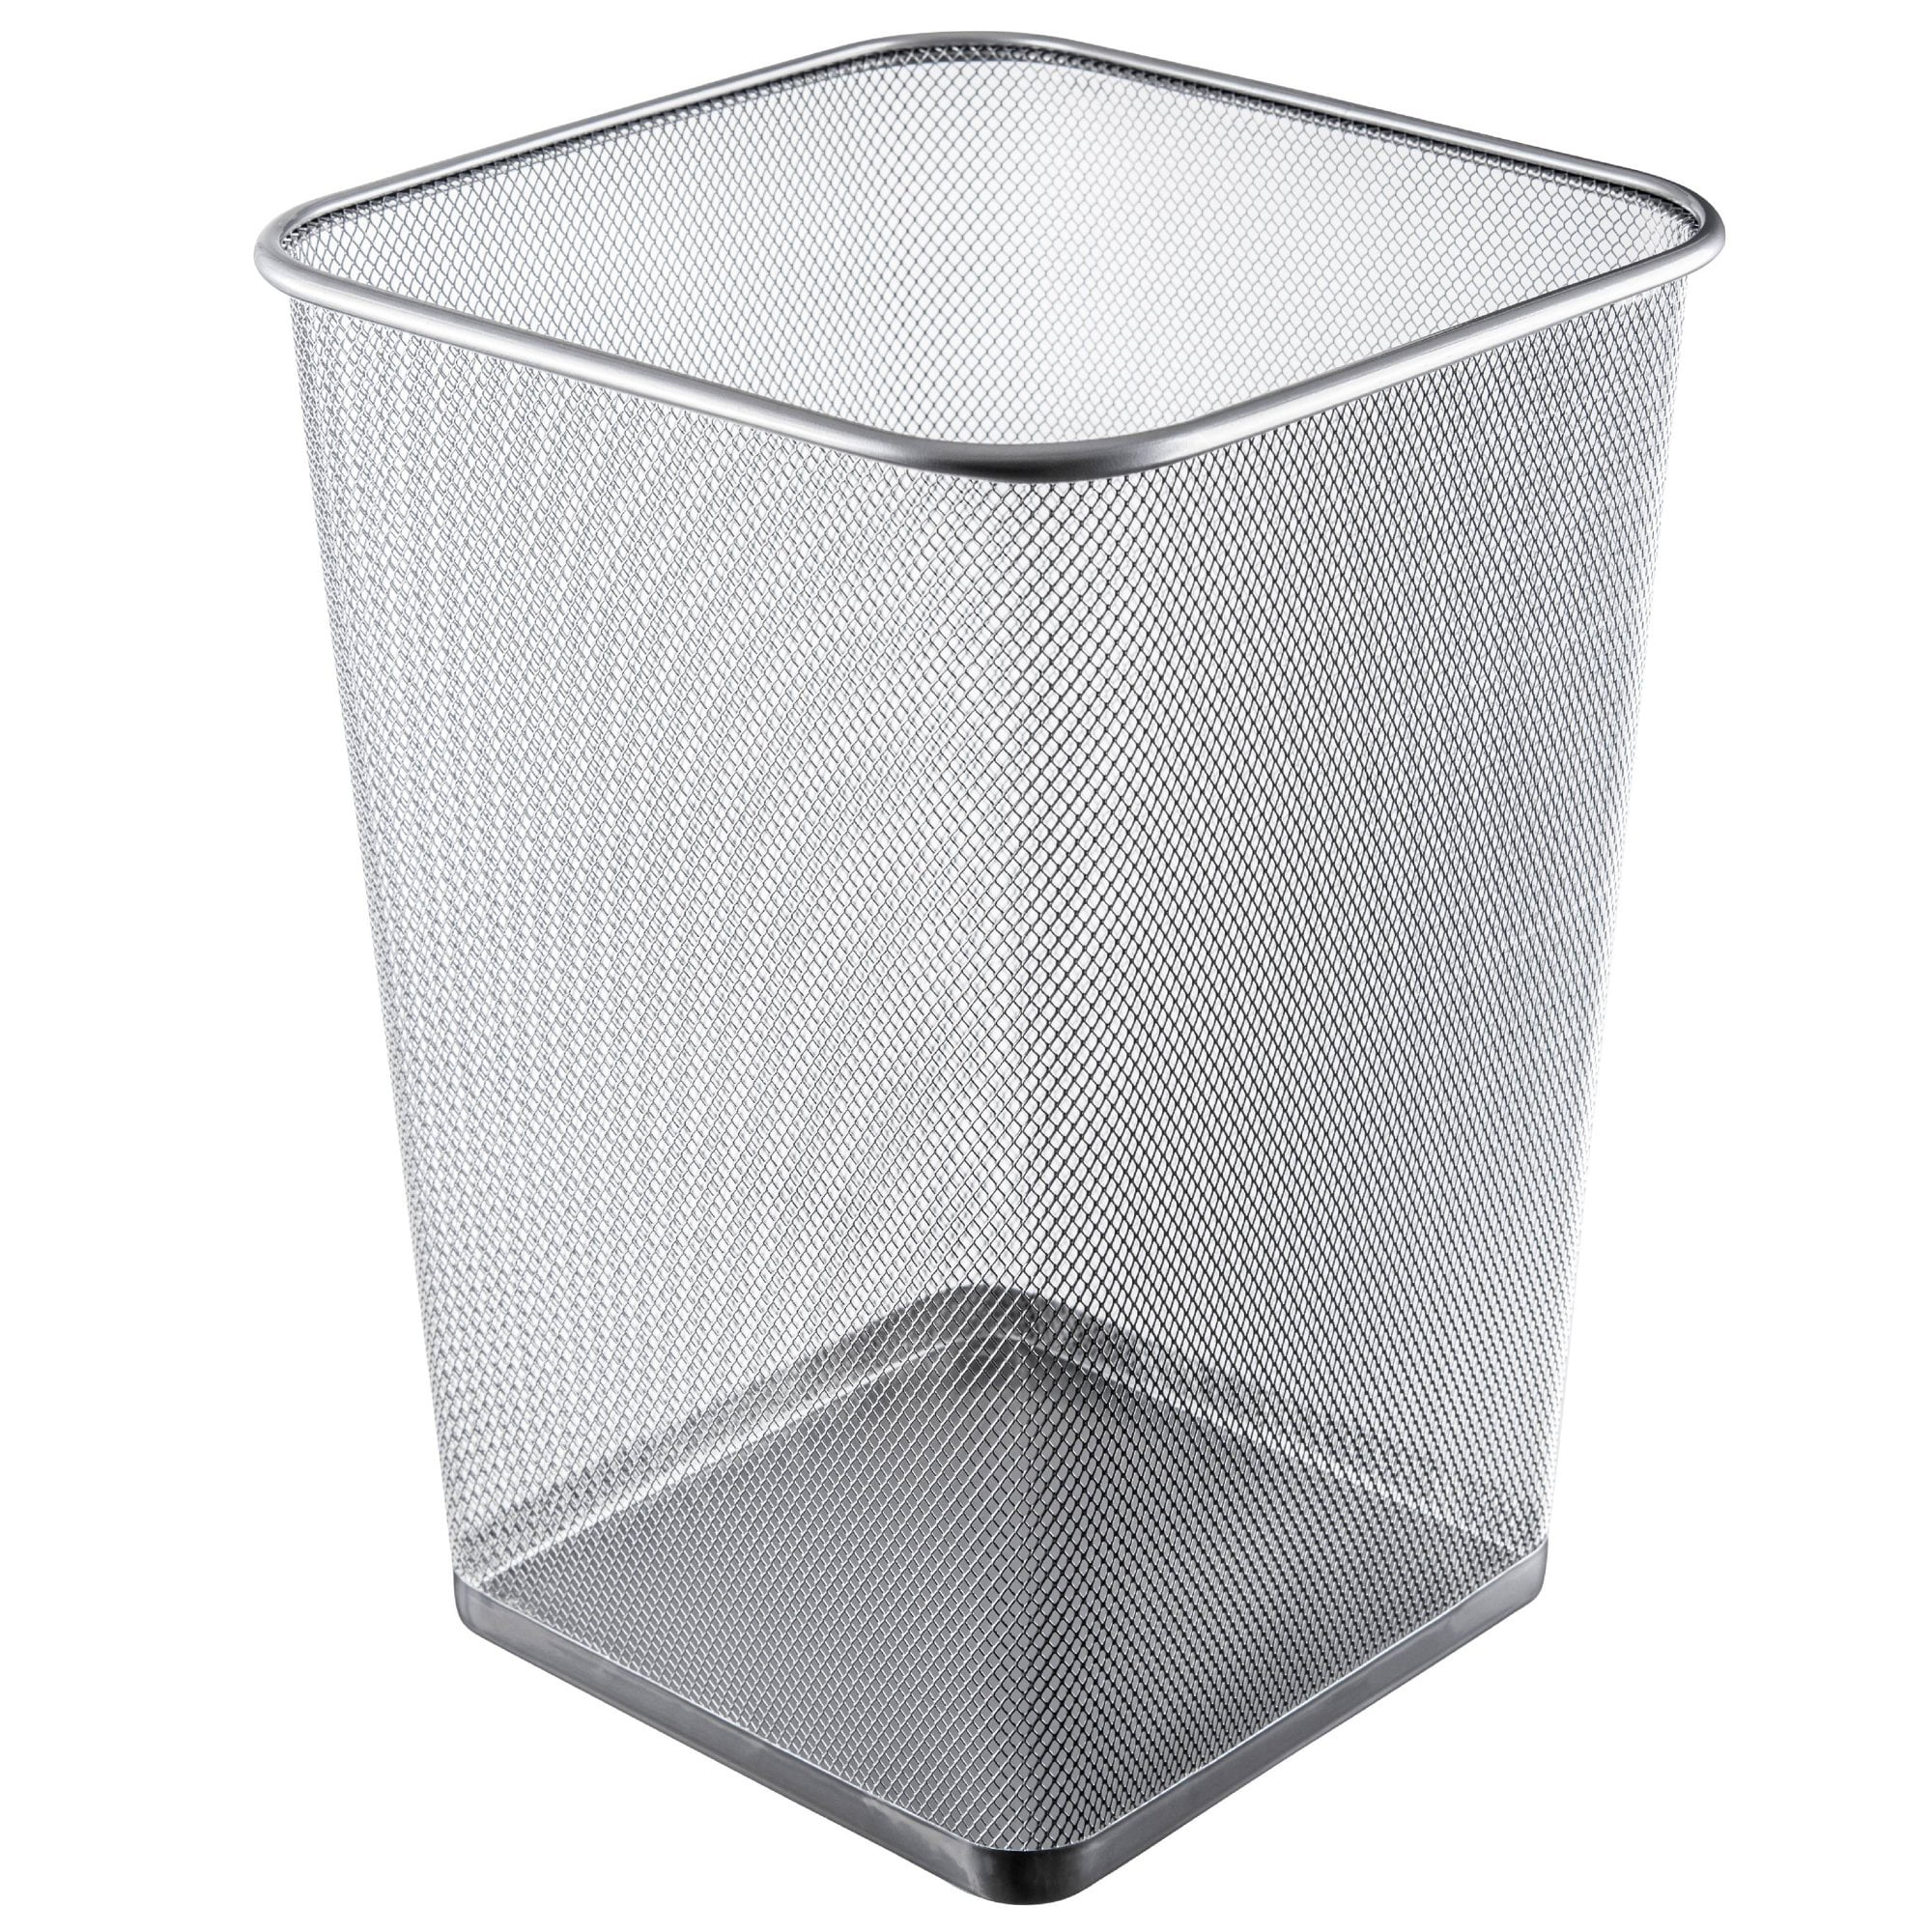 Metal Mesh Waste Basket Garbage Bin Trash Can Paper Container Desk Side Office 